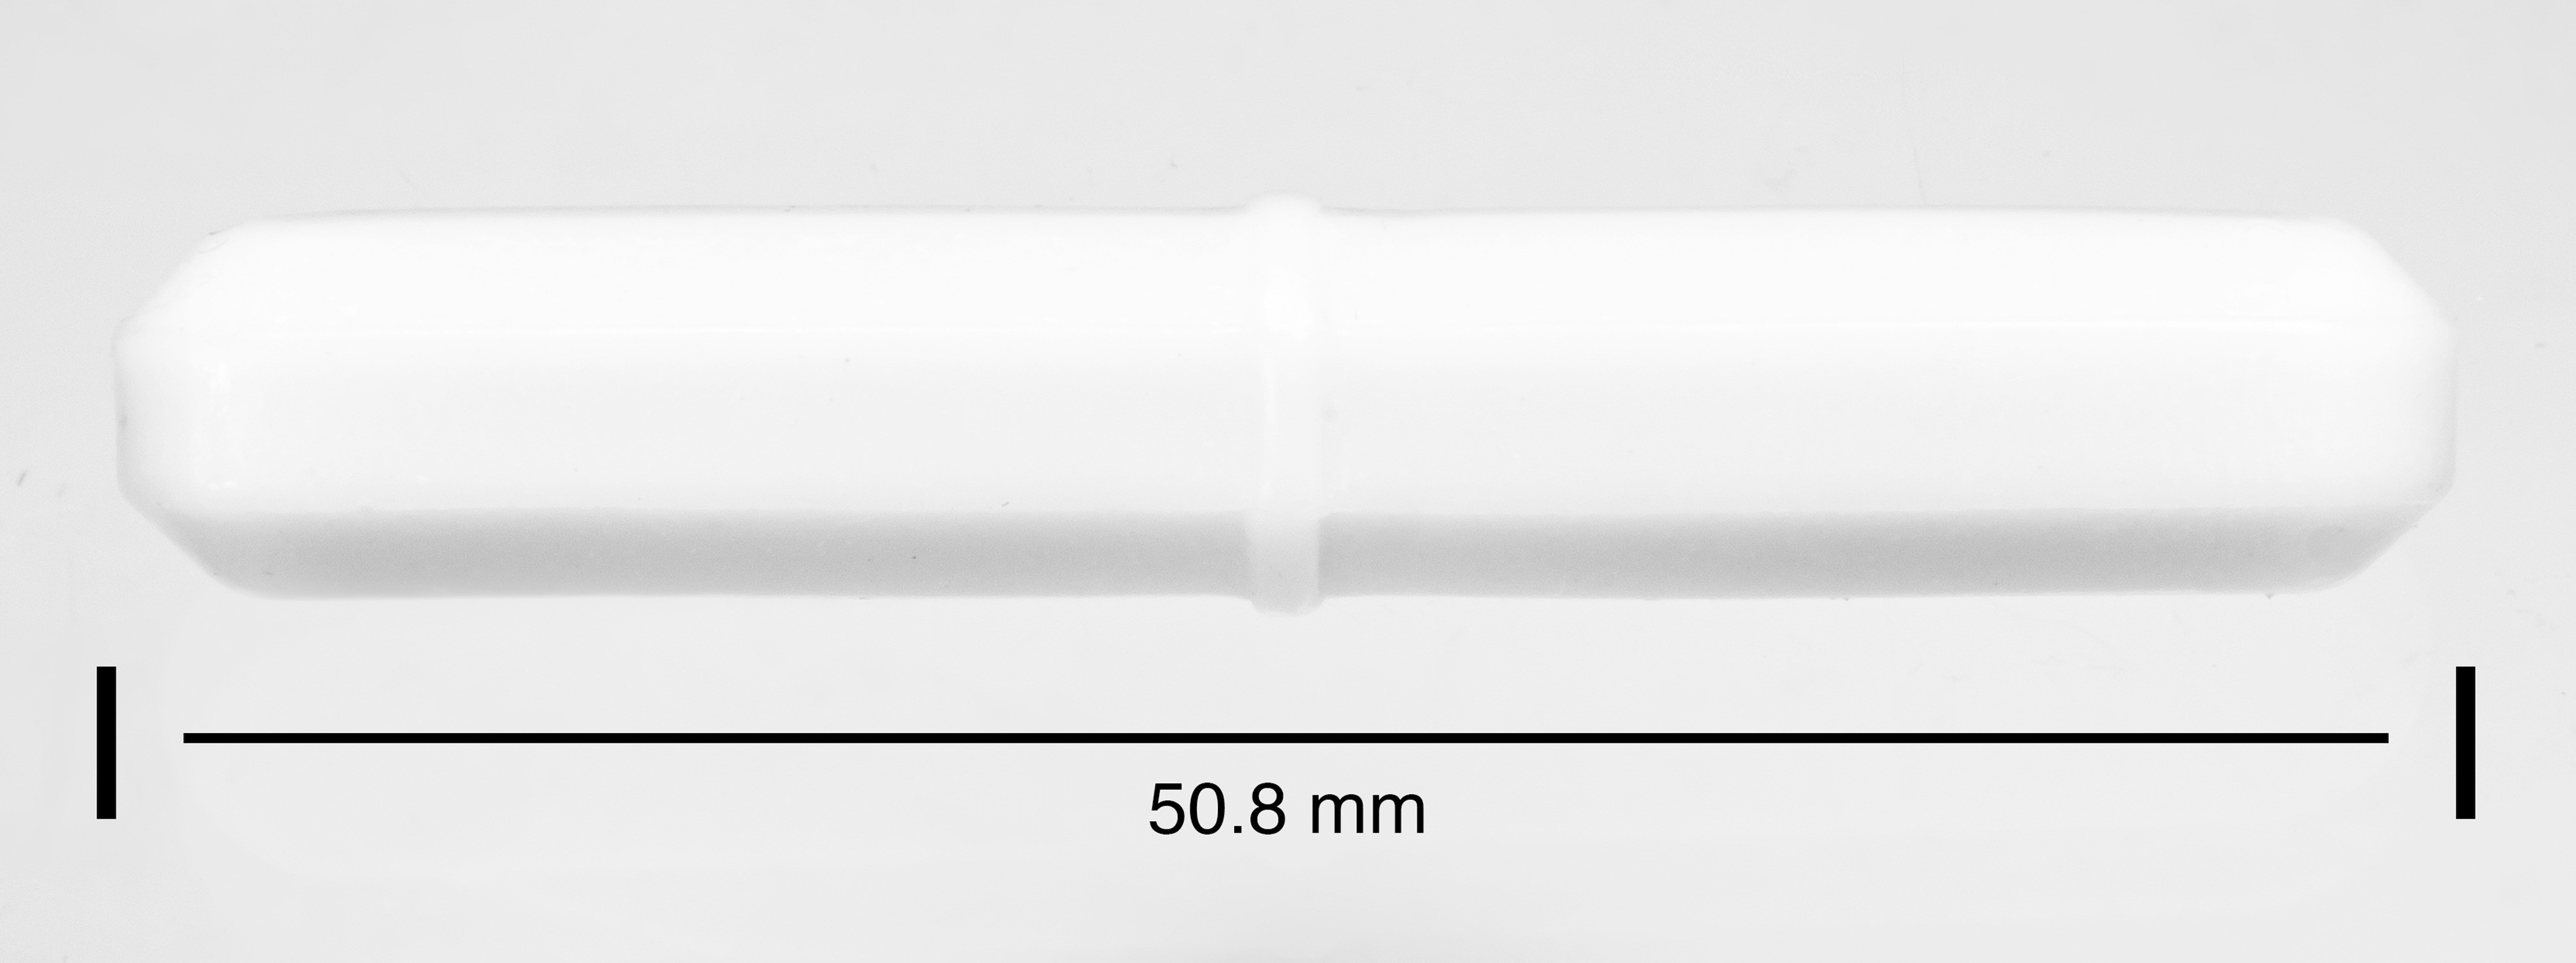 SP Bel-Art Spinbar Teflon Octagon Magnetic Stirring Bar; 50.8 x 8mm, White